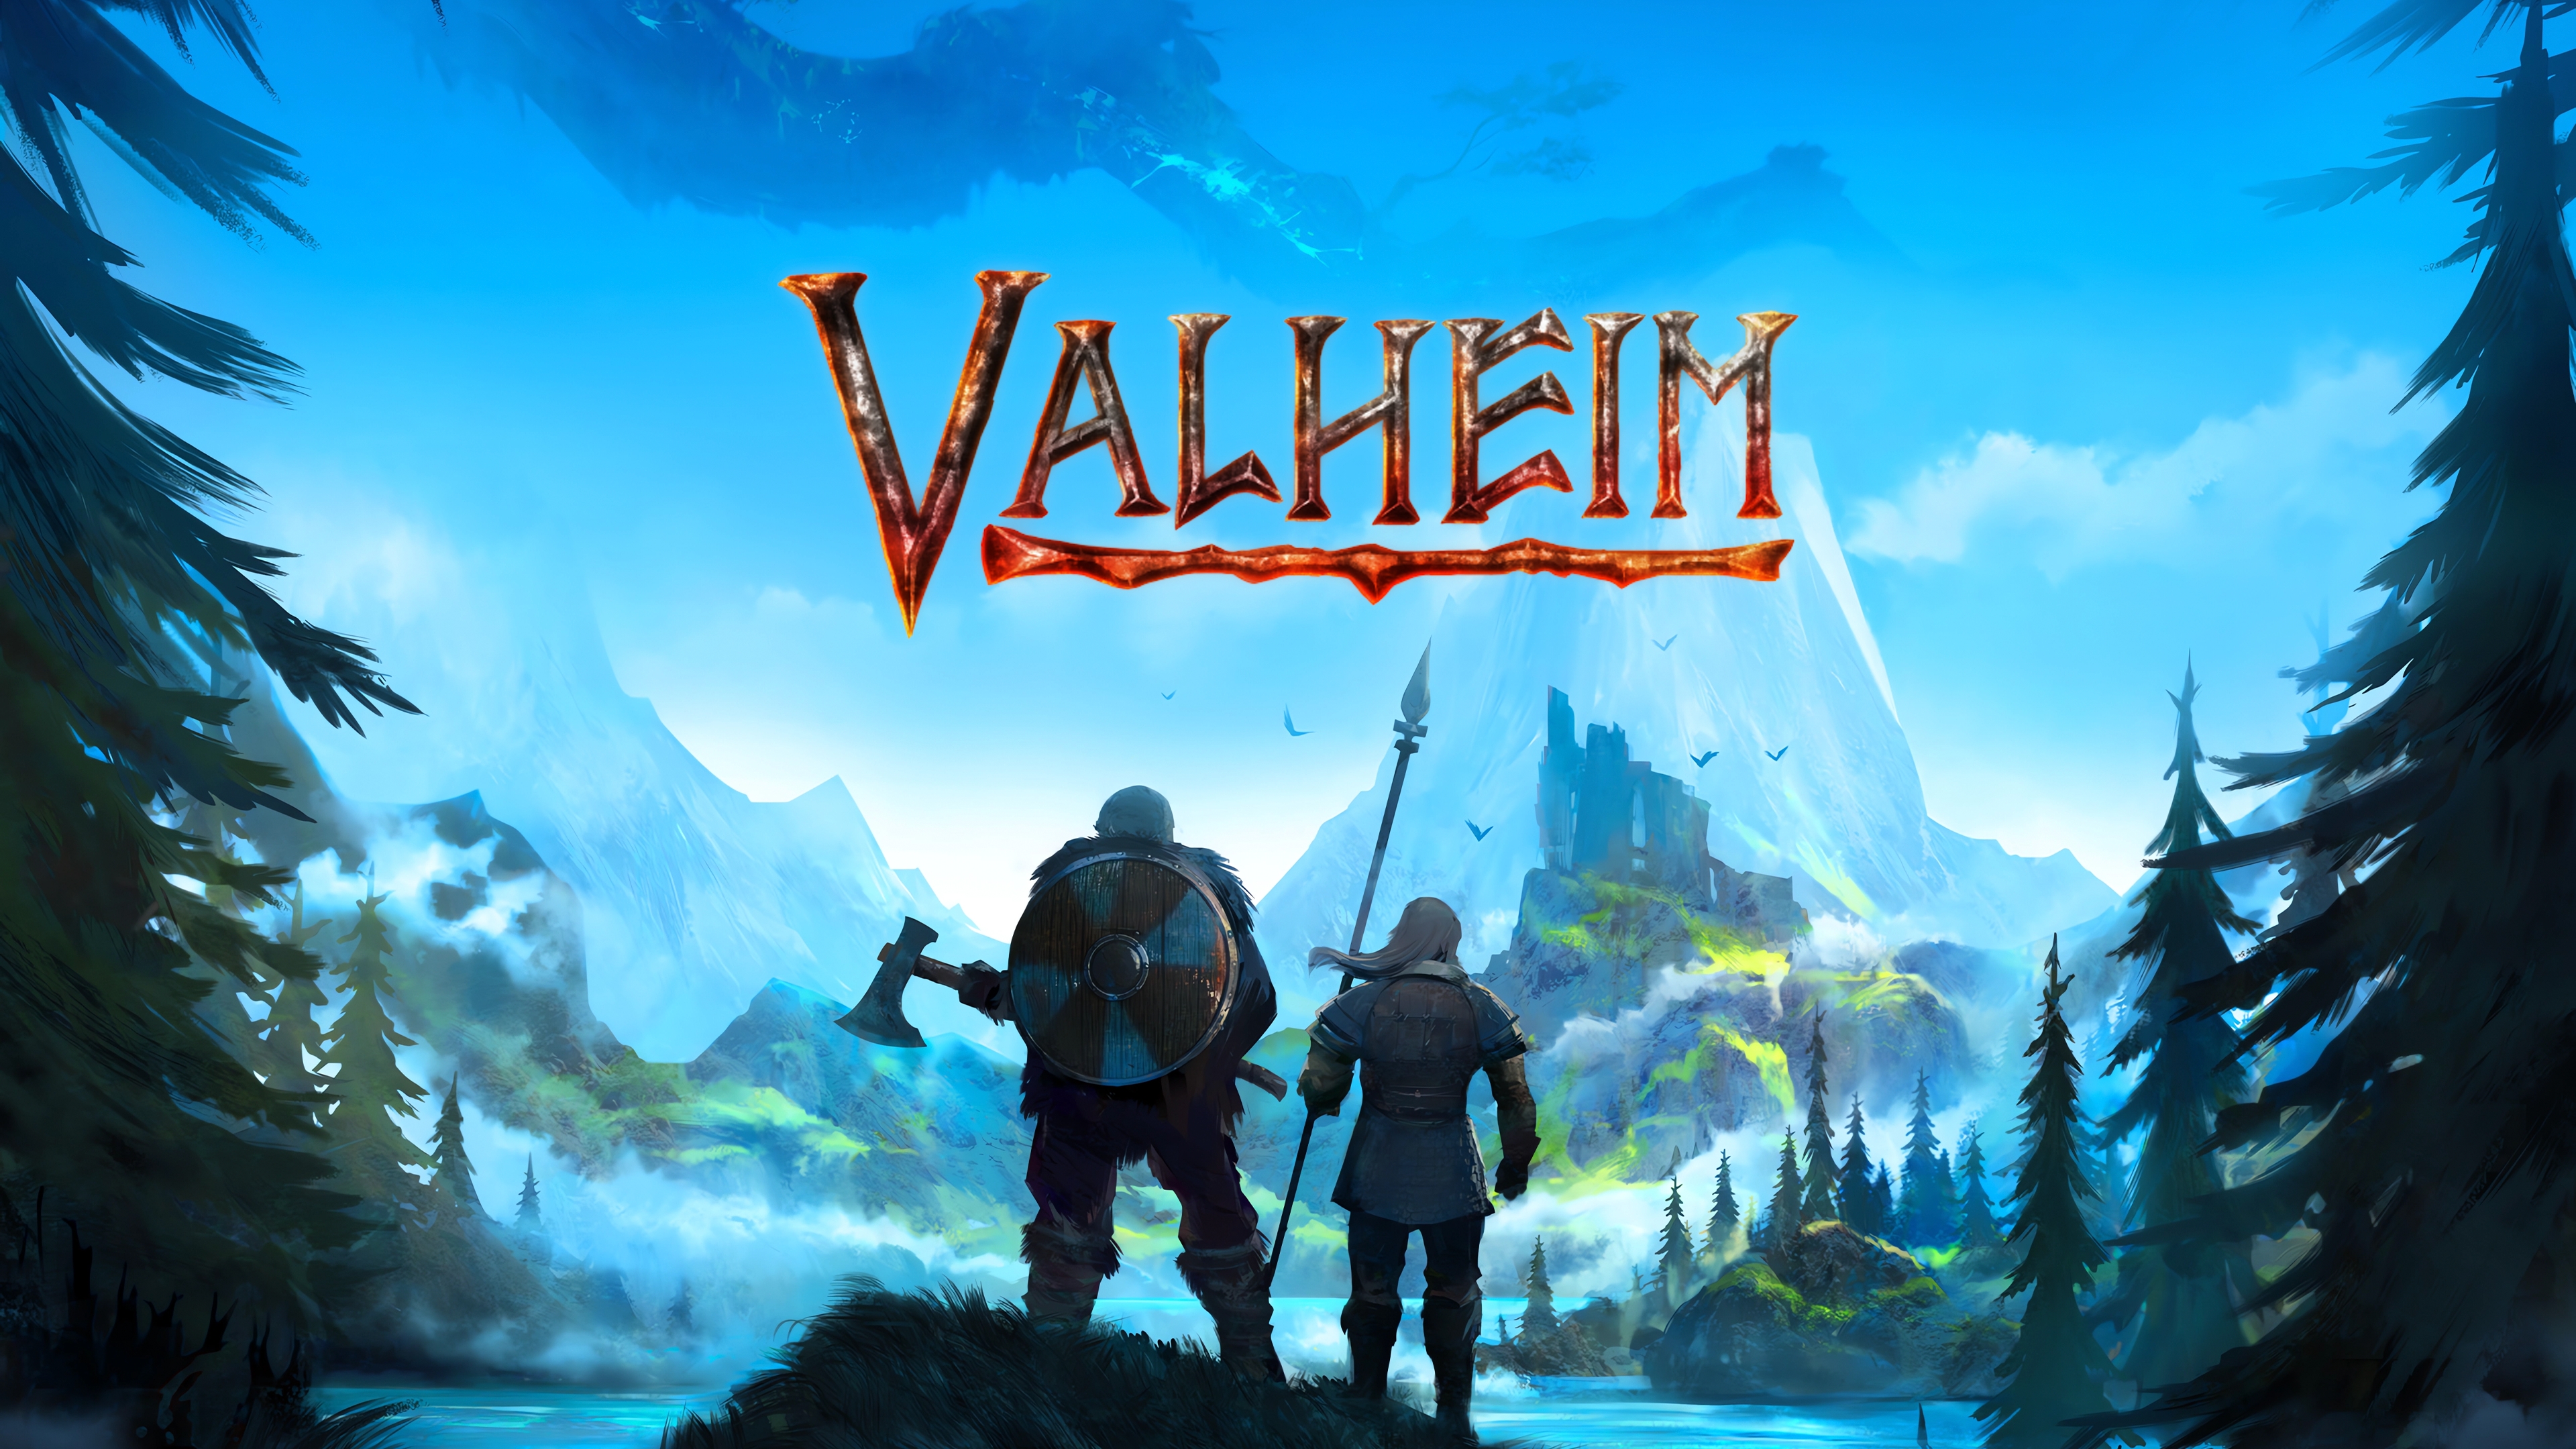 Game of the Year 2021: Valheim